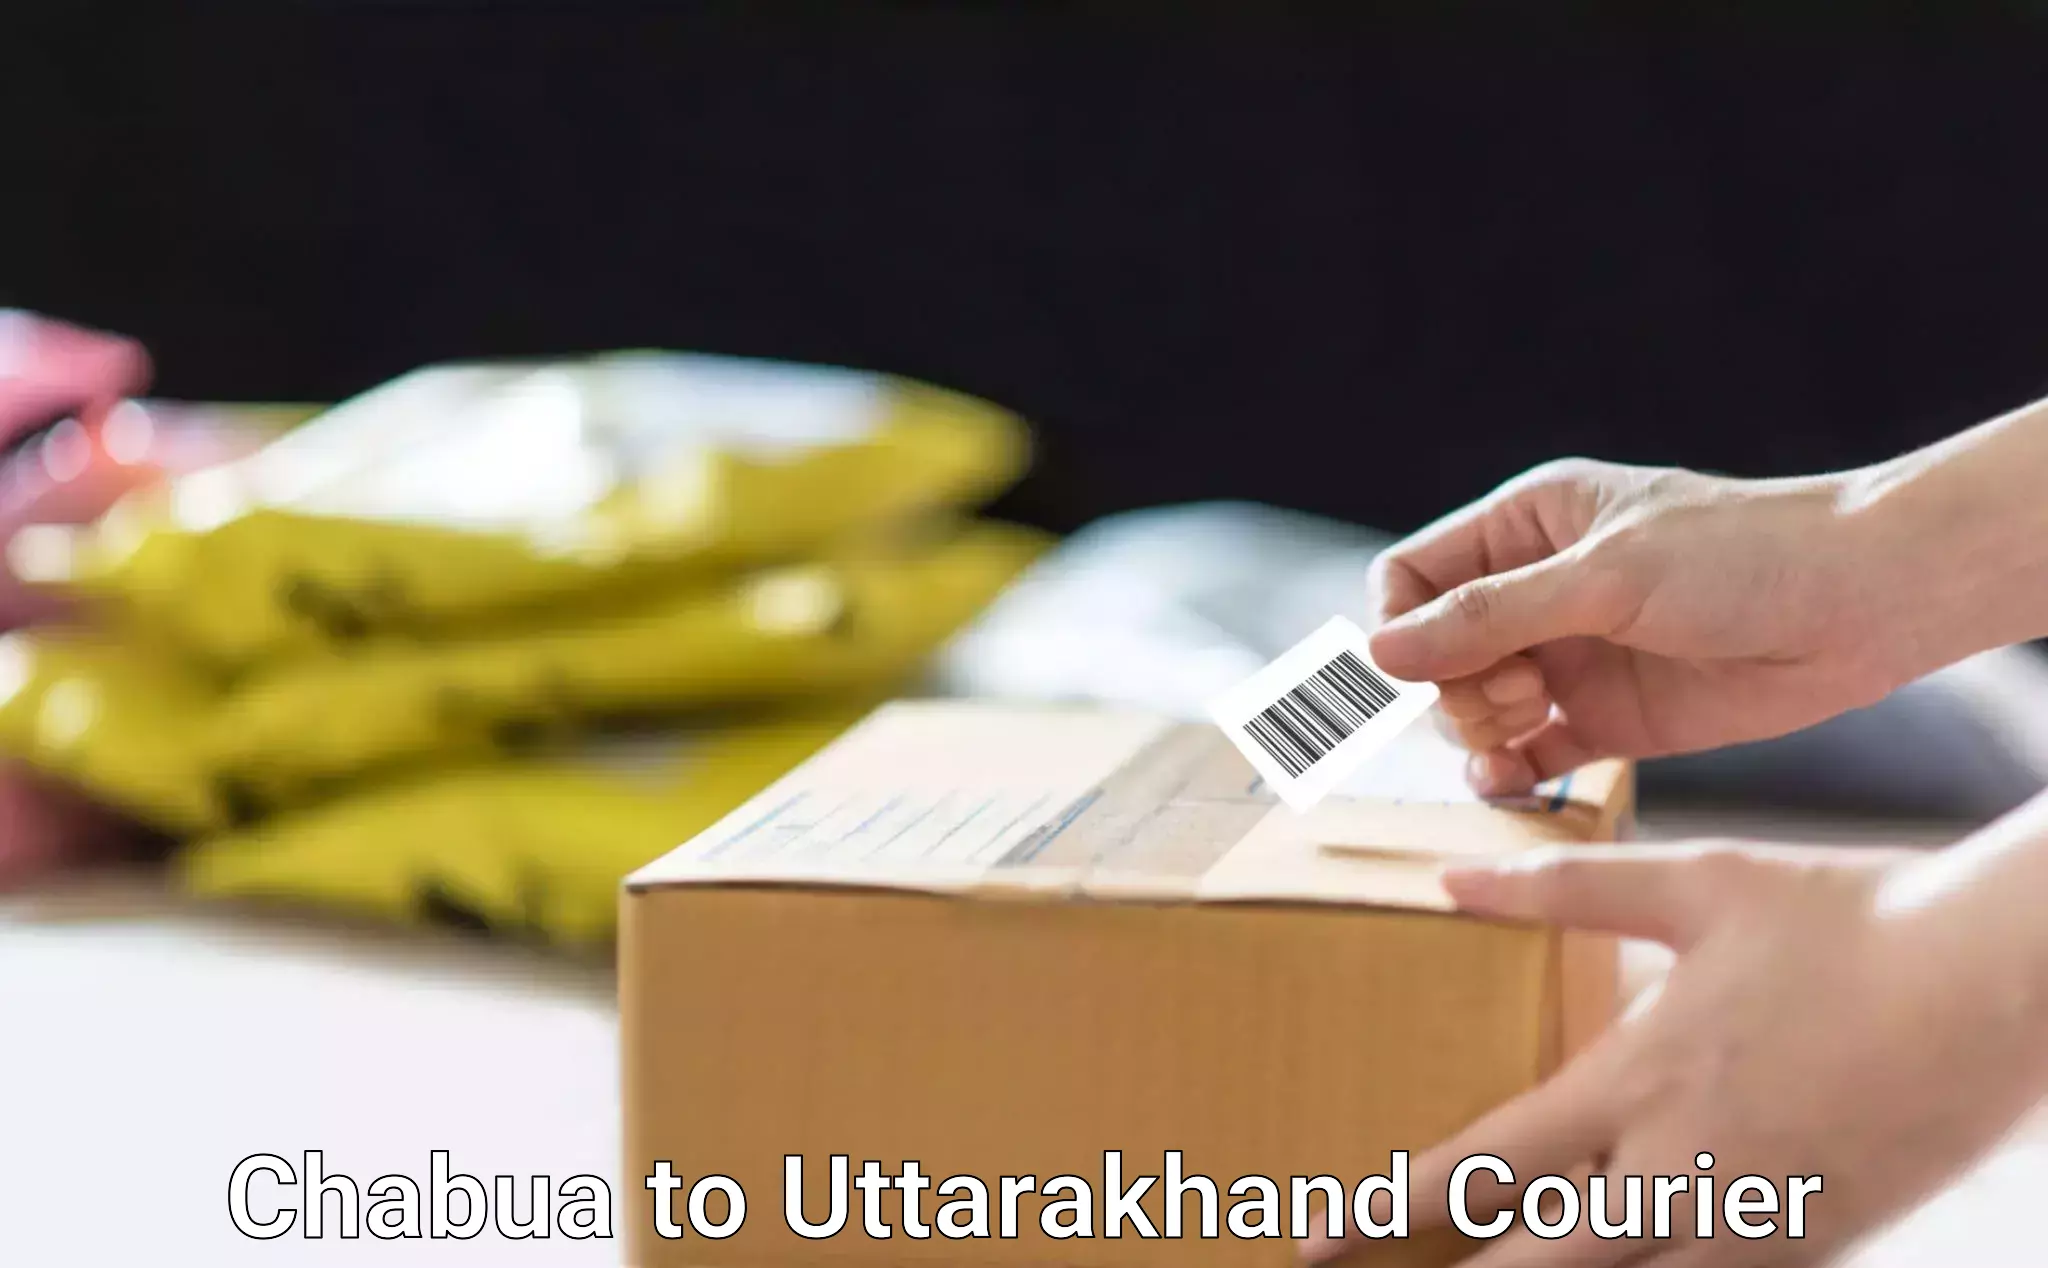 Next-day delivery options Chabua to Uttarakhand